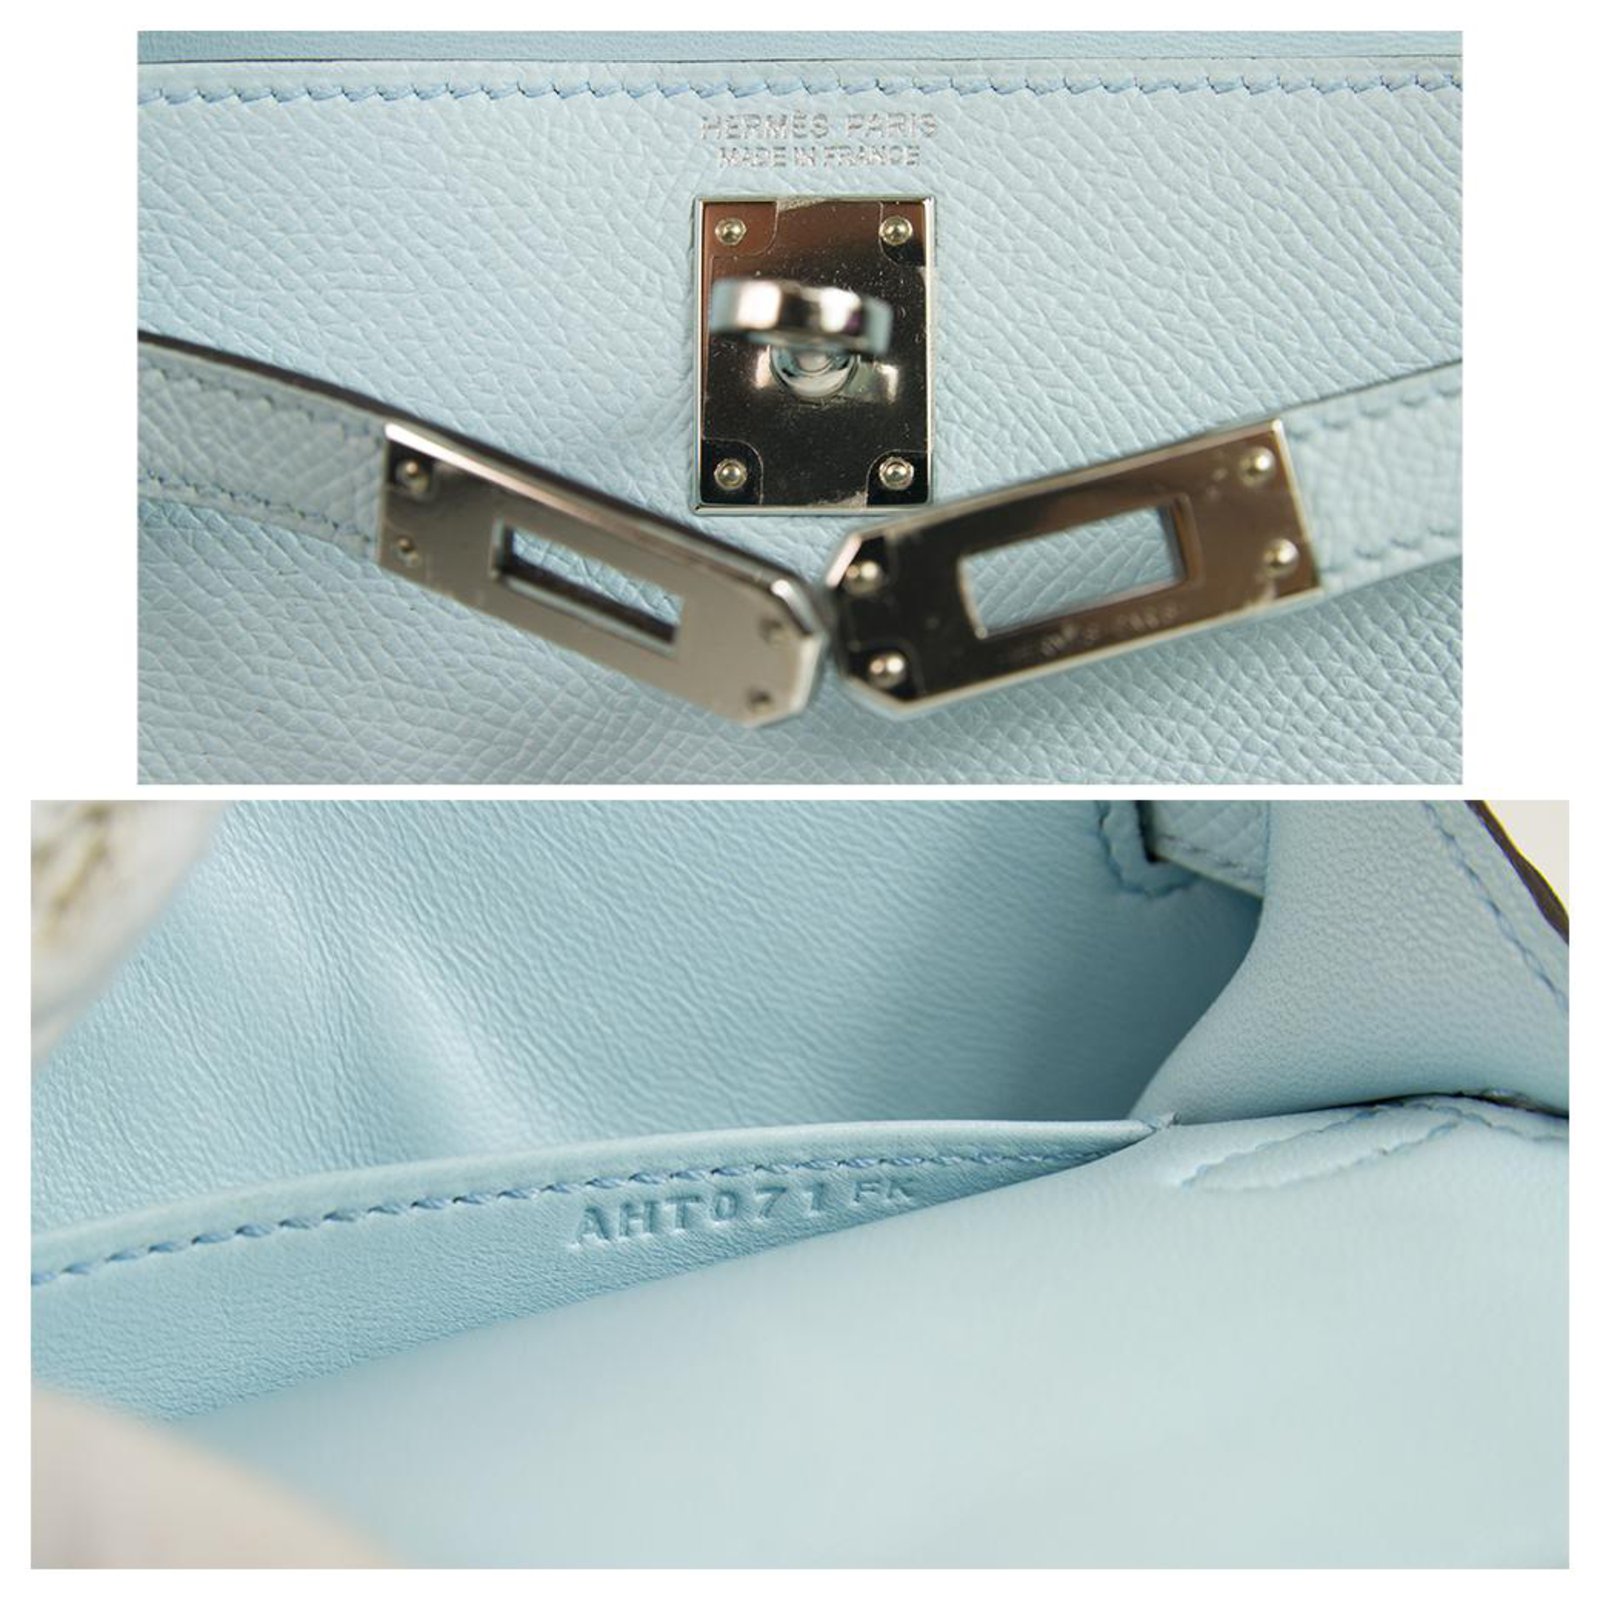 Hermès Mini Kelly 20 II Bleu Glacier Bleu Pale Veau Epsom with Palladium  Hardware - Bags - Kabinet Privé